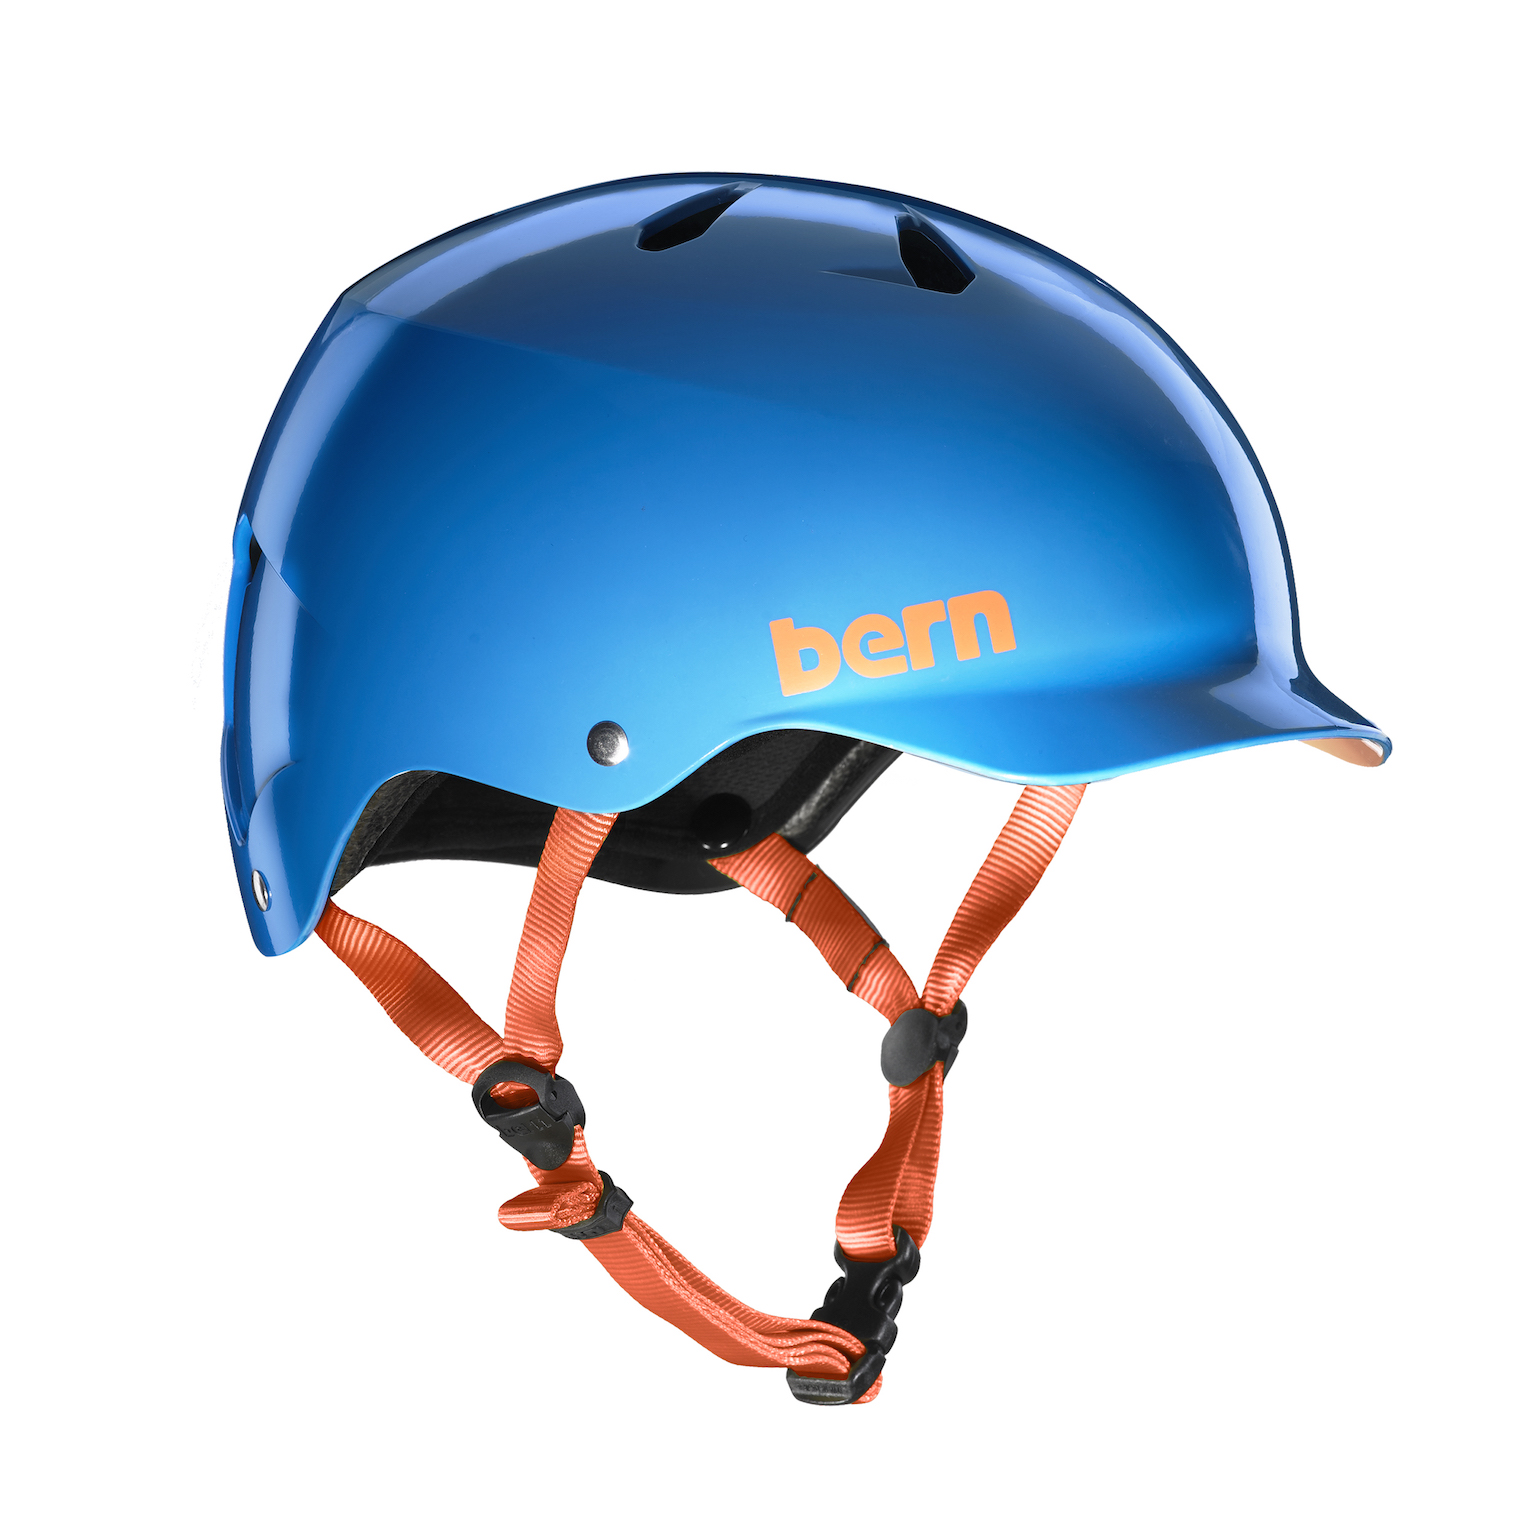 Bern Helmets SS20 Skate Helmet & Protection Preview